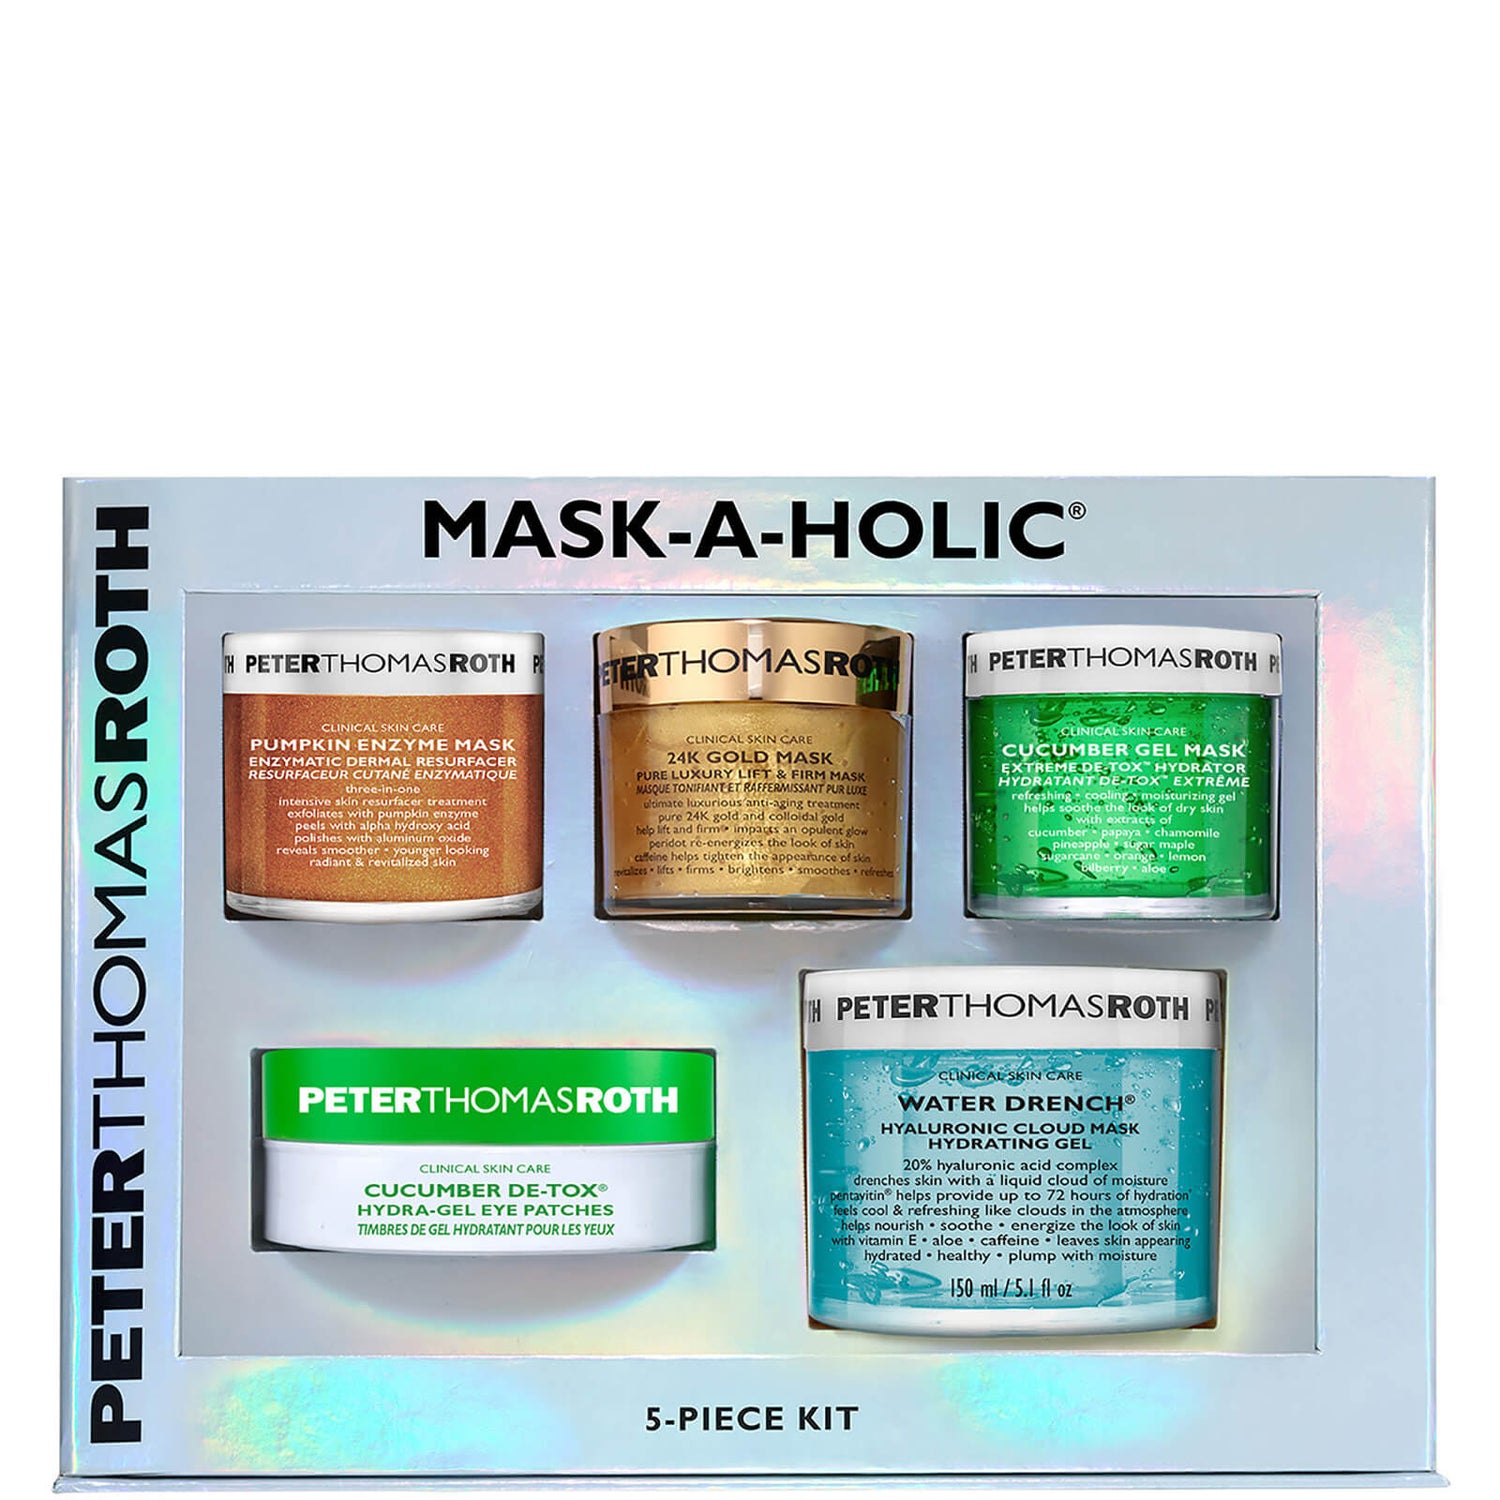 Peter Thomas Roth Mask-A-Holic Kit (Worth $215.00)